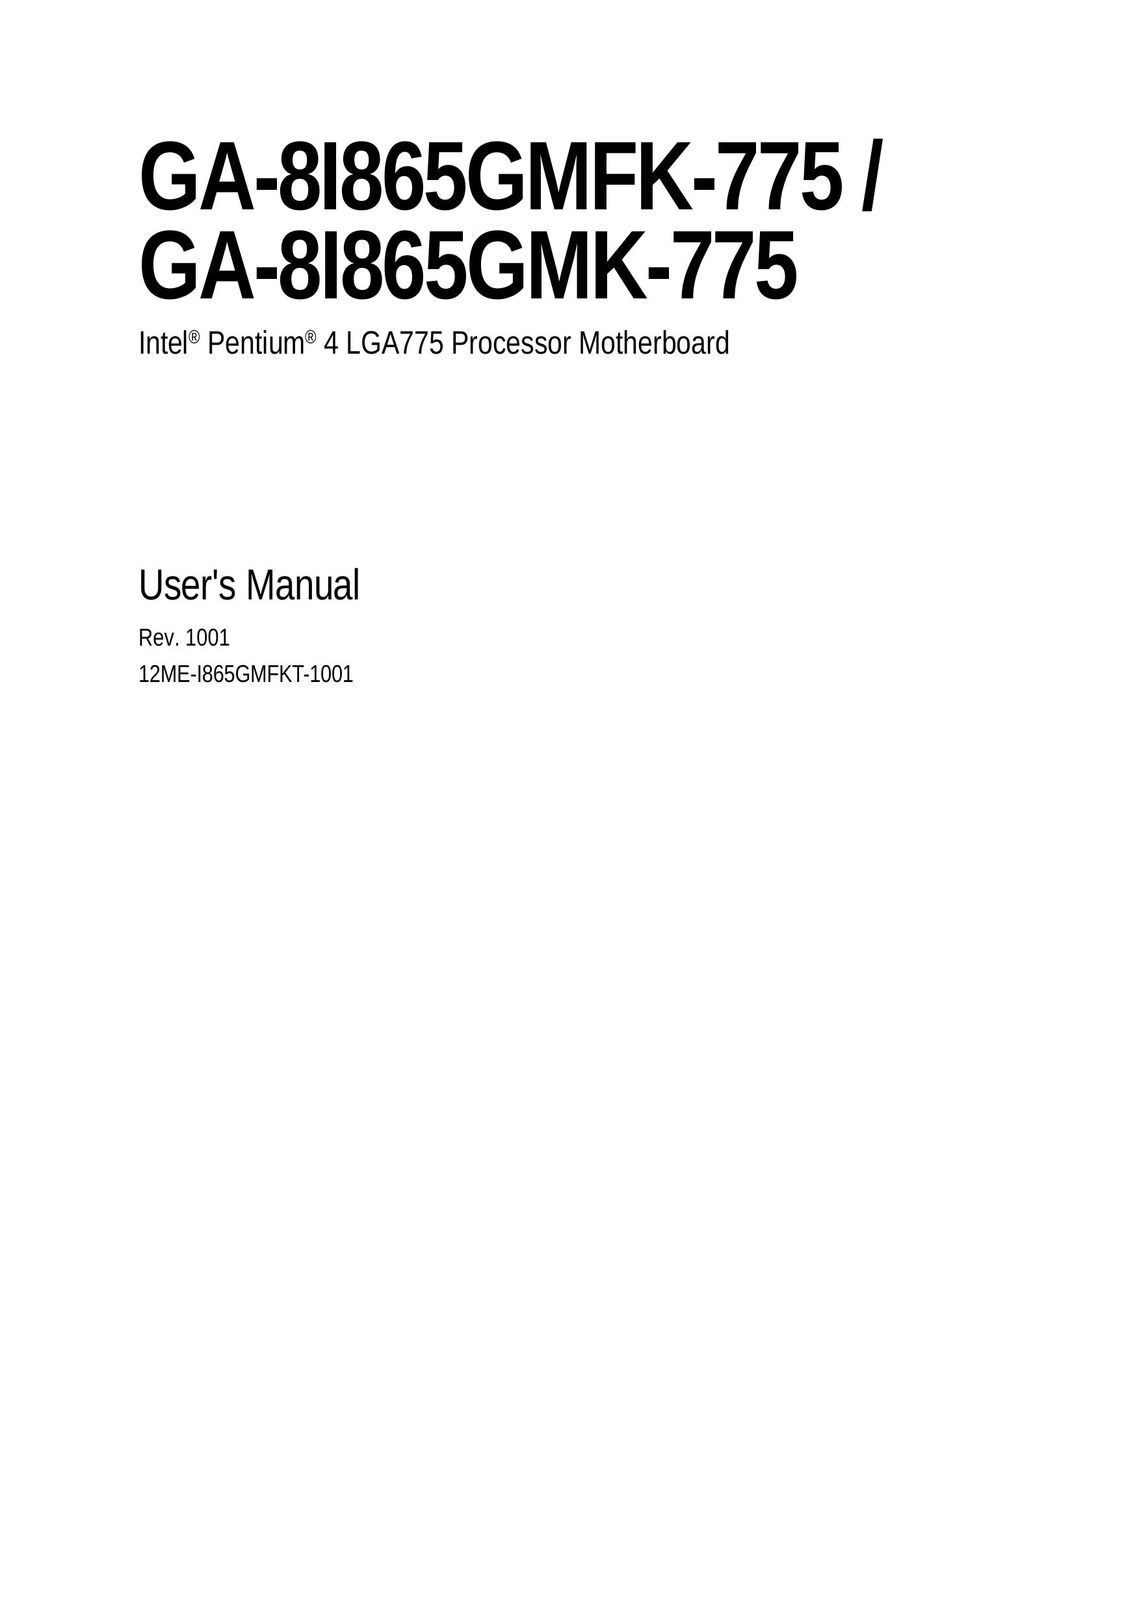 Gigabyte GA-8I865GMK-775 Network Card User Manual